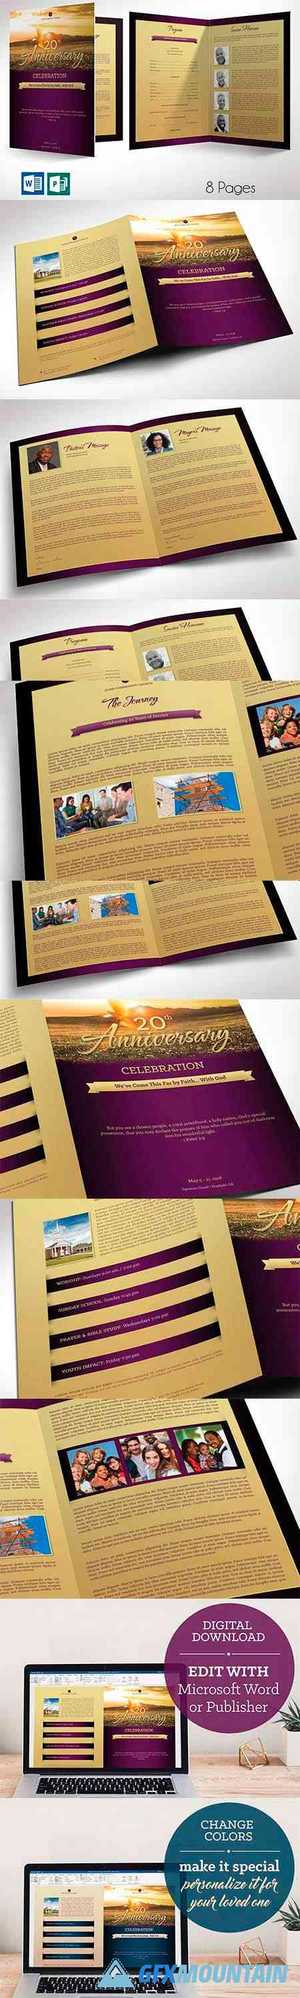 Church Anniversary Program Lrge Word 4652191